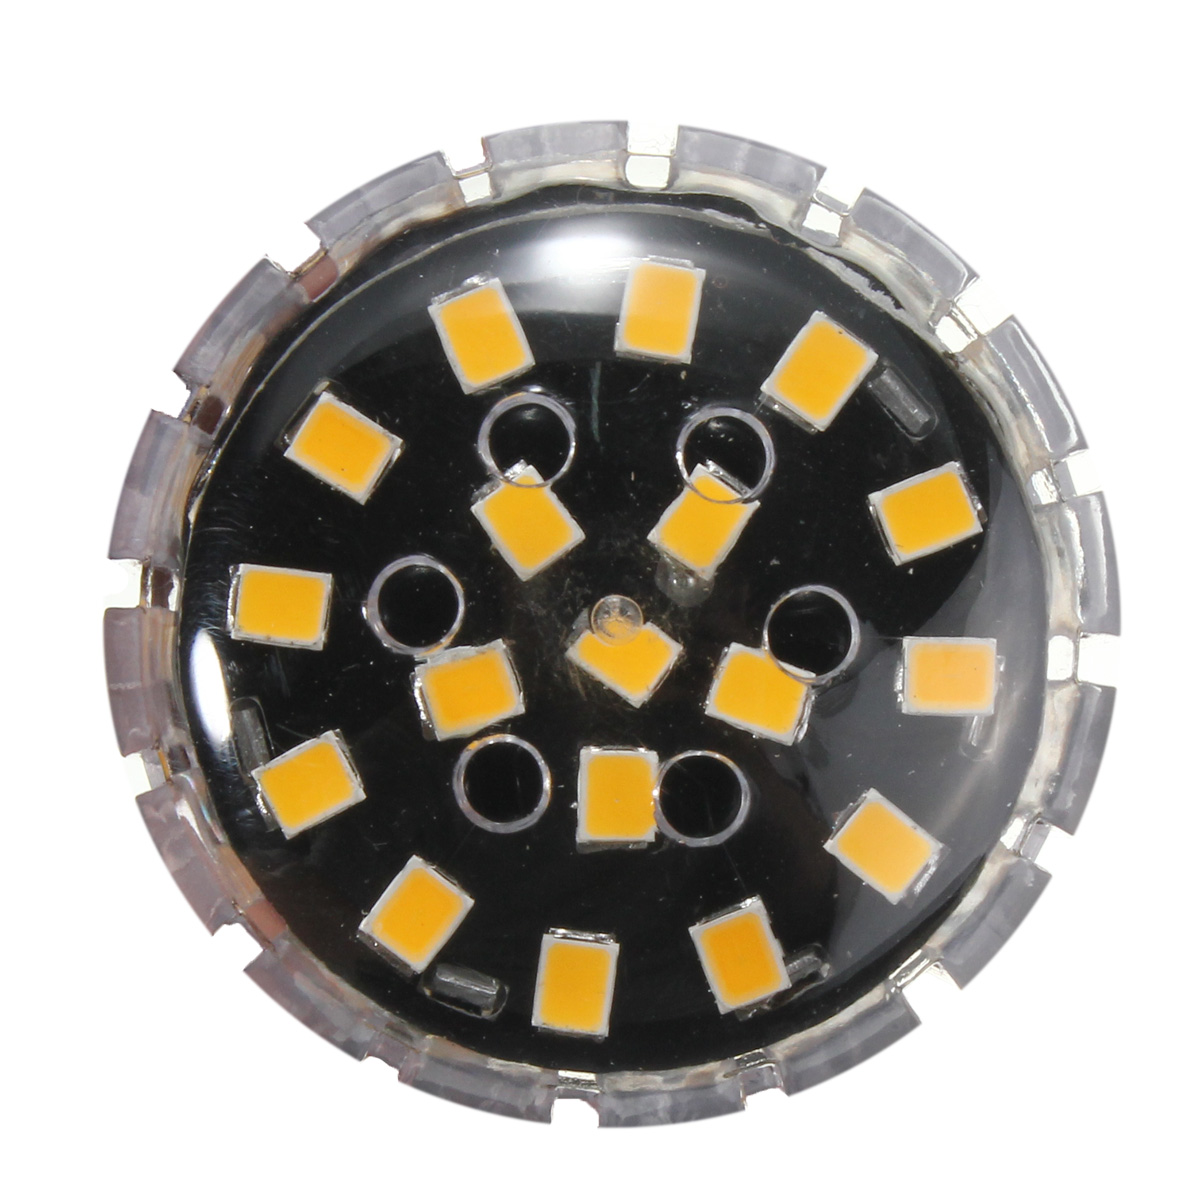 E14-B22-E27-11W-LED-2835-SMD-Warm-White--White-Cover-Corn-Light-Lamp-Bulb-Non-Dimmable-AC-220V-1035834-4